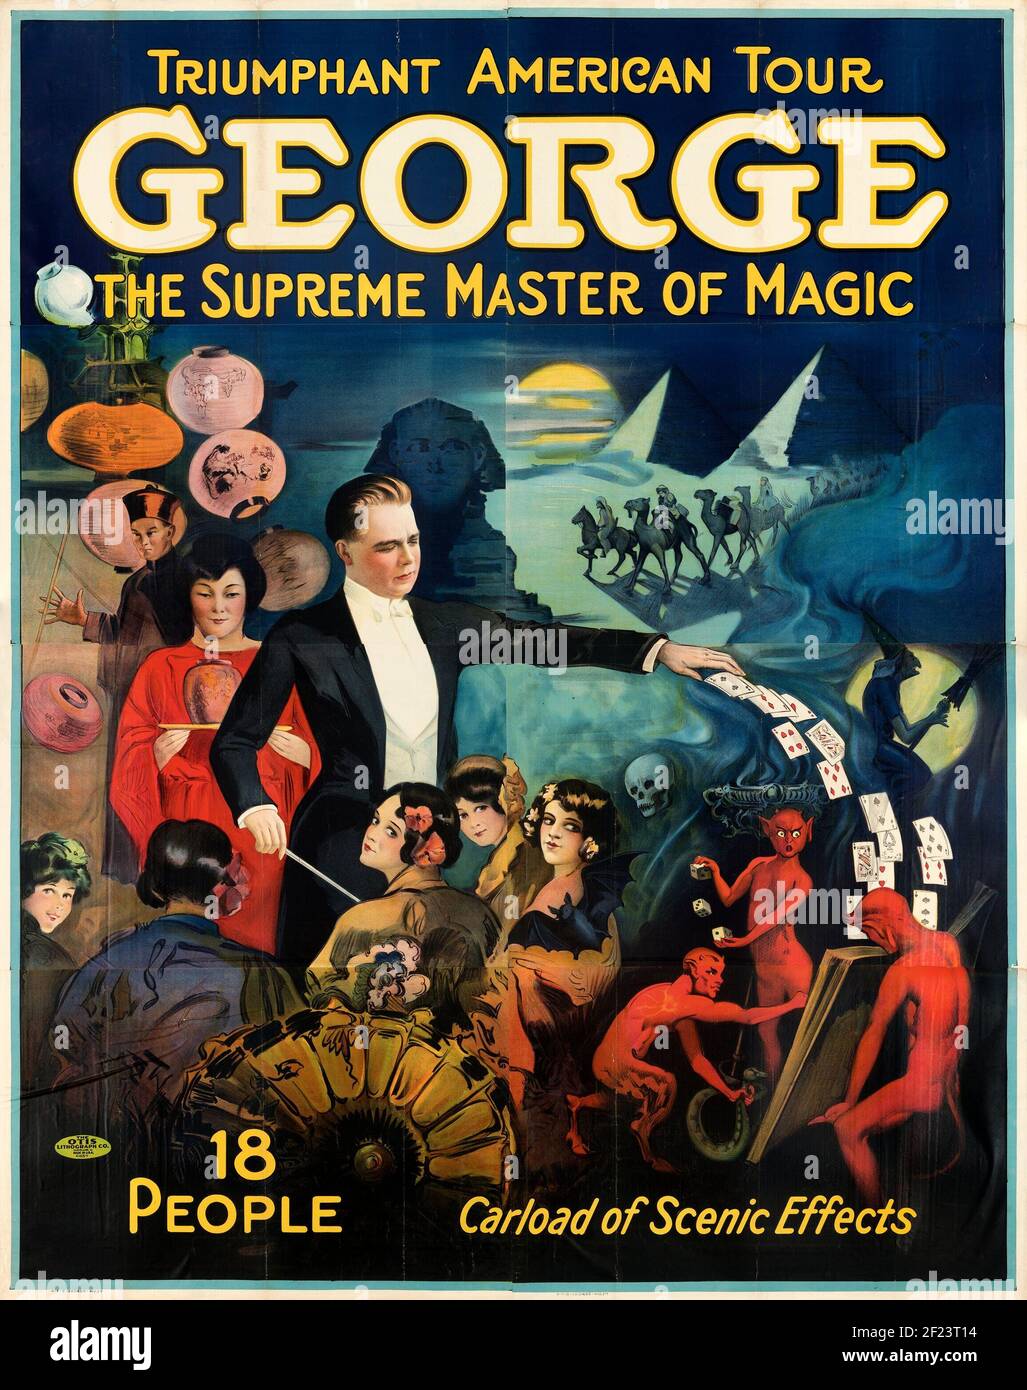 Triunfante American Tour, George el Maestro Supremo de la Magia, 1920s Foto de stock